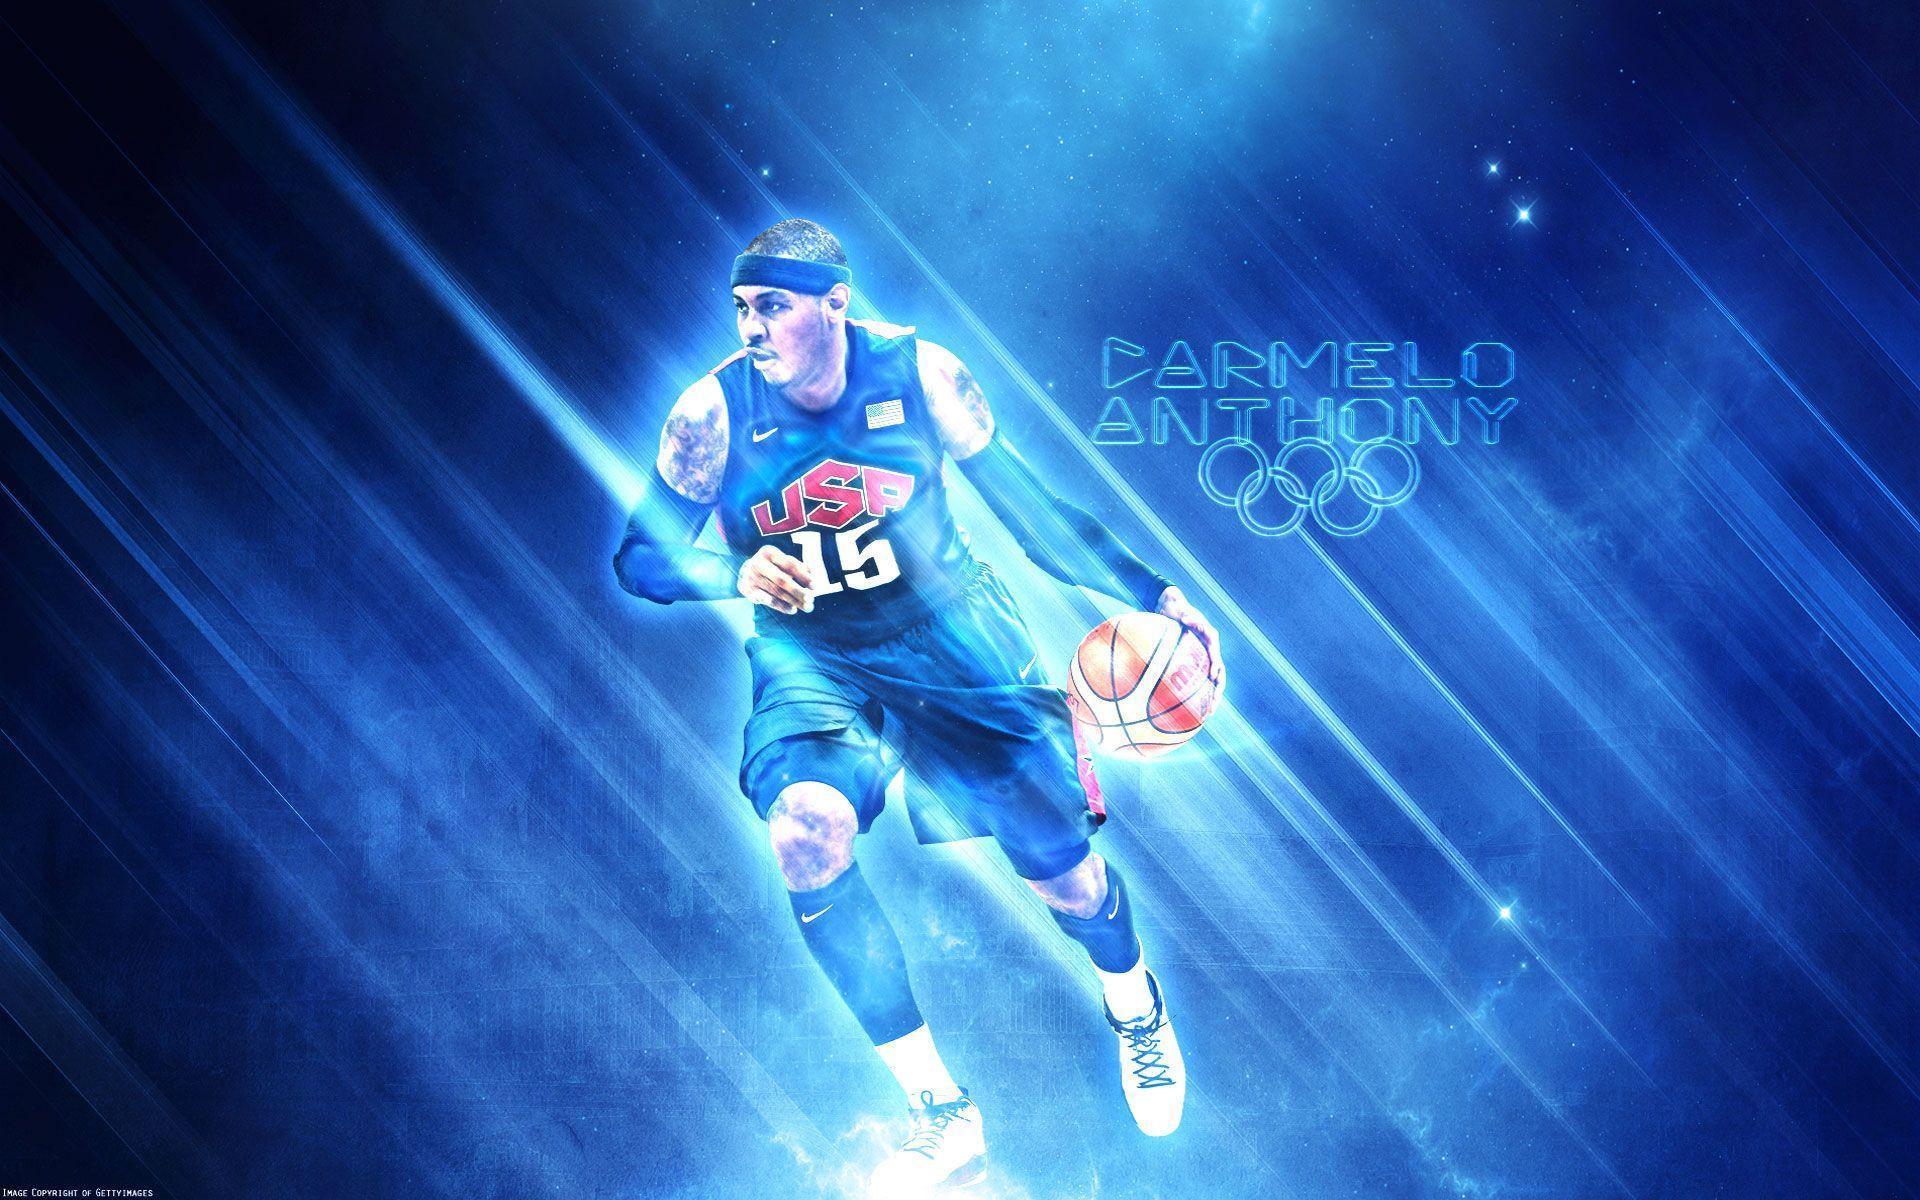 Carmelo Anthony Olympics 2012 1920×1200 Wallpaper. Basketball